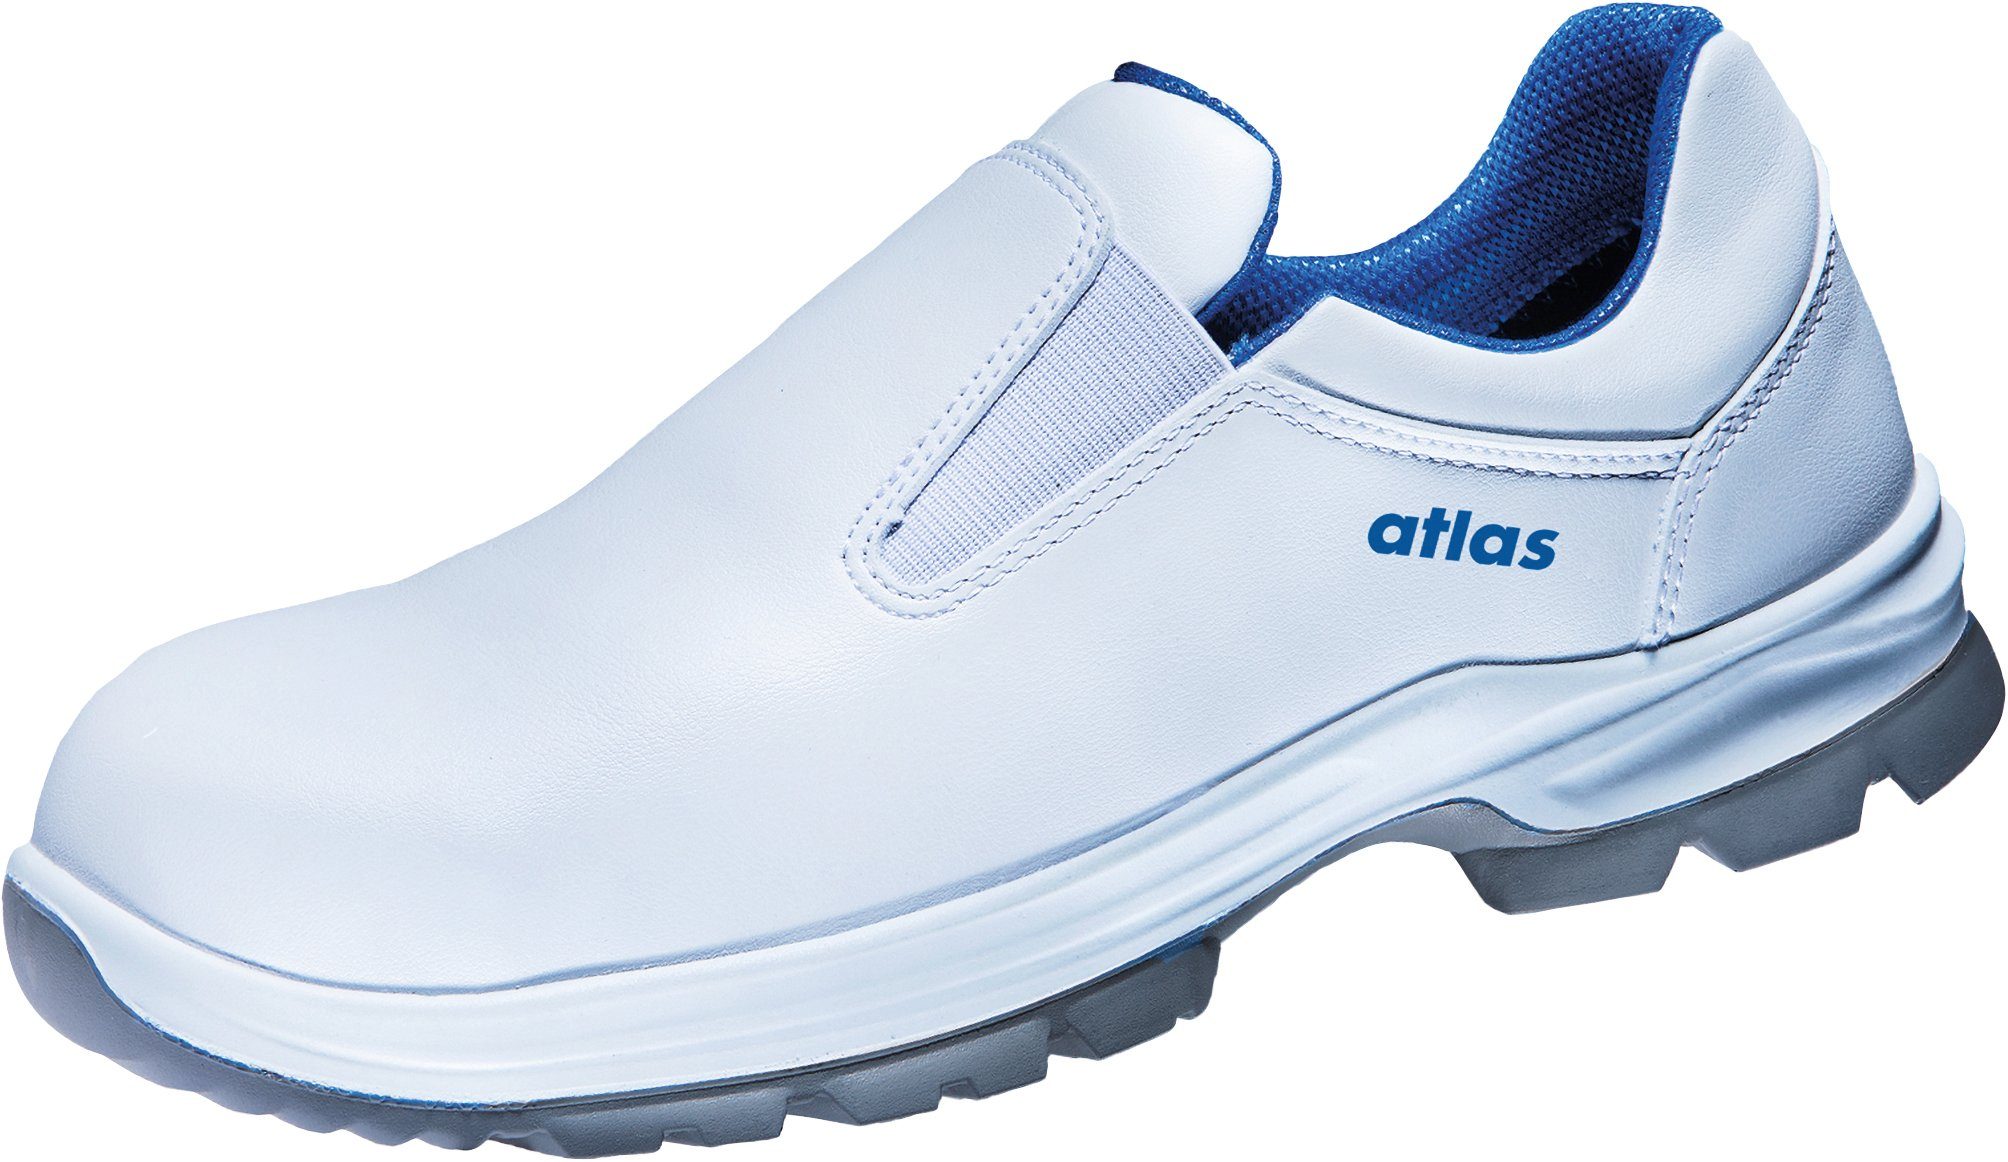 CL Arbeitsschuh Atlas ESD S2 Schuhe 490 2.0 Sneaker